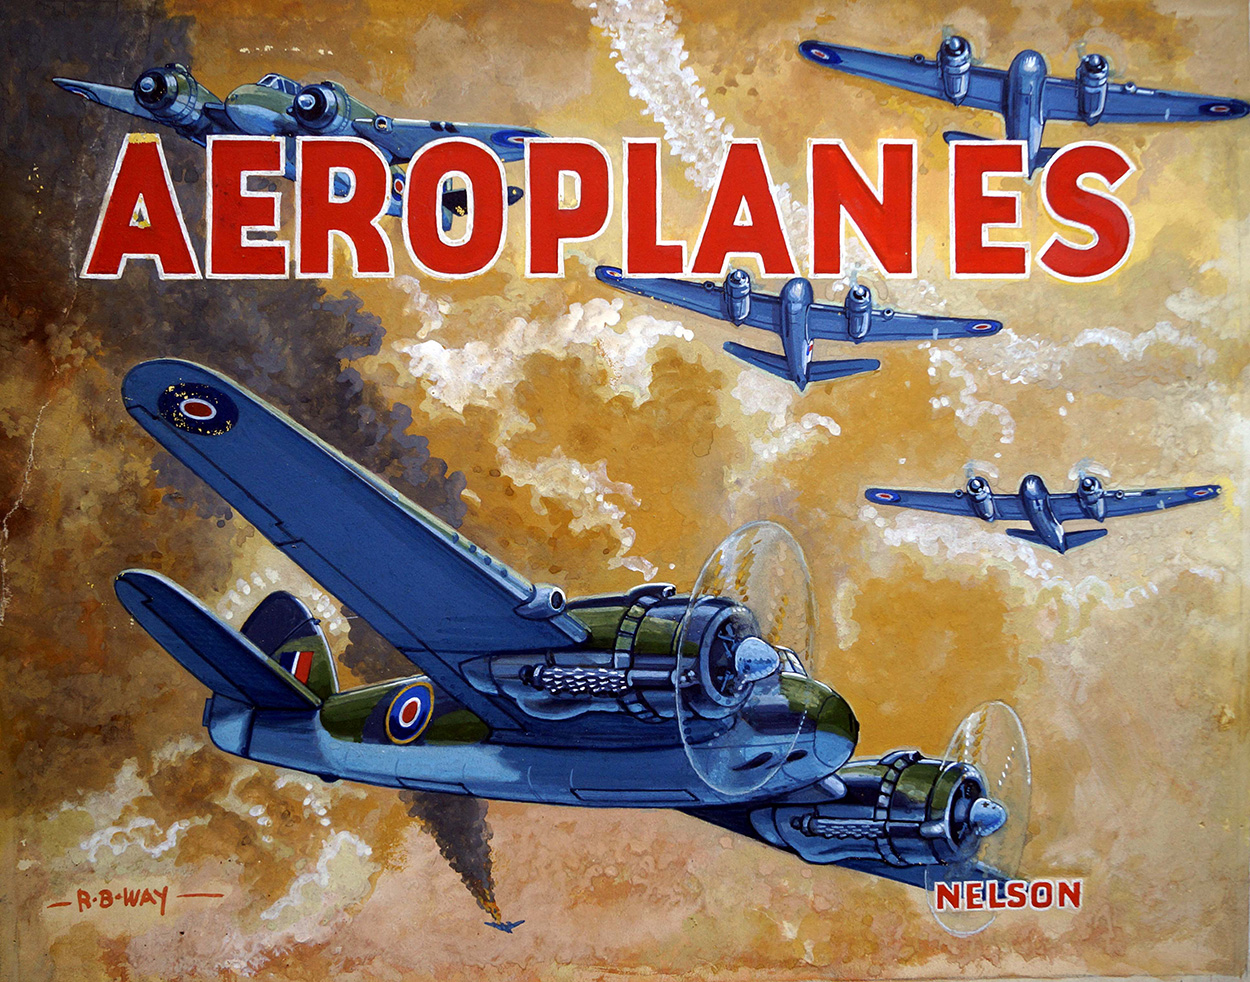 Aeroplanes - Front Cover (Original) (Signed) art by Robert Barnard Way Art at The Illustration Art Gallery